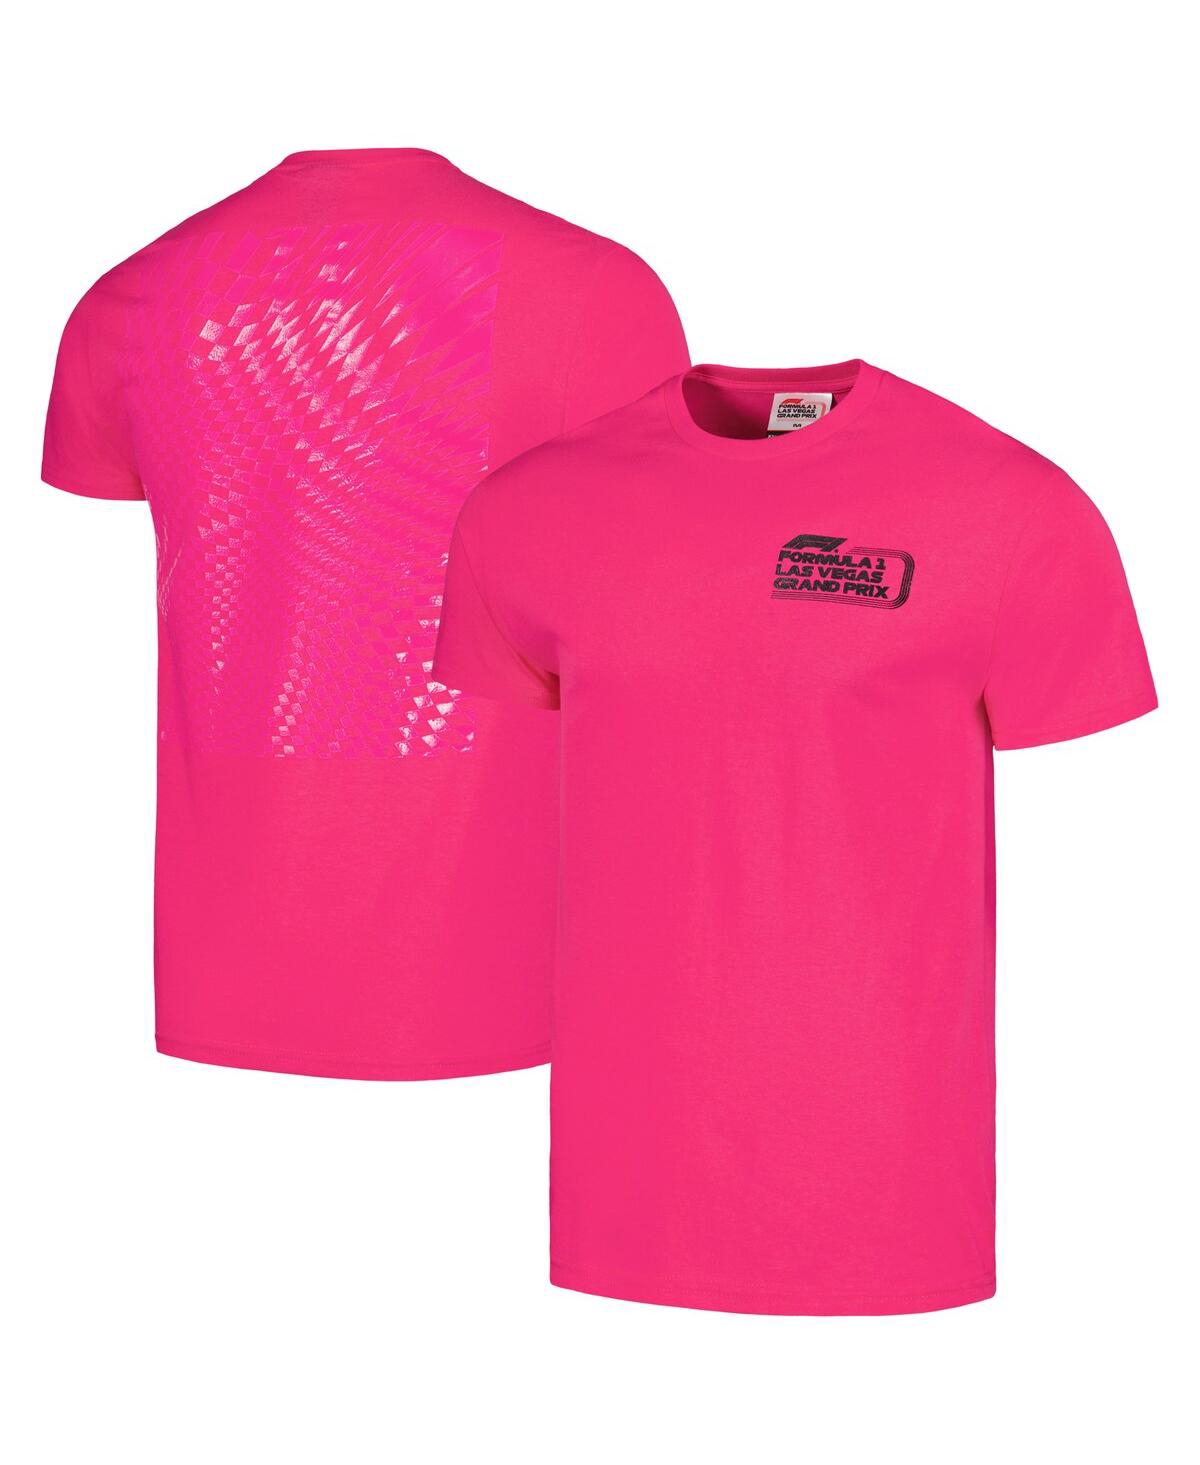 Men's and Women's Pink Formula 1 Las Vegas Grand Prix Mono Core T-shirt - Pink